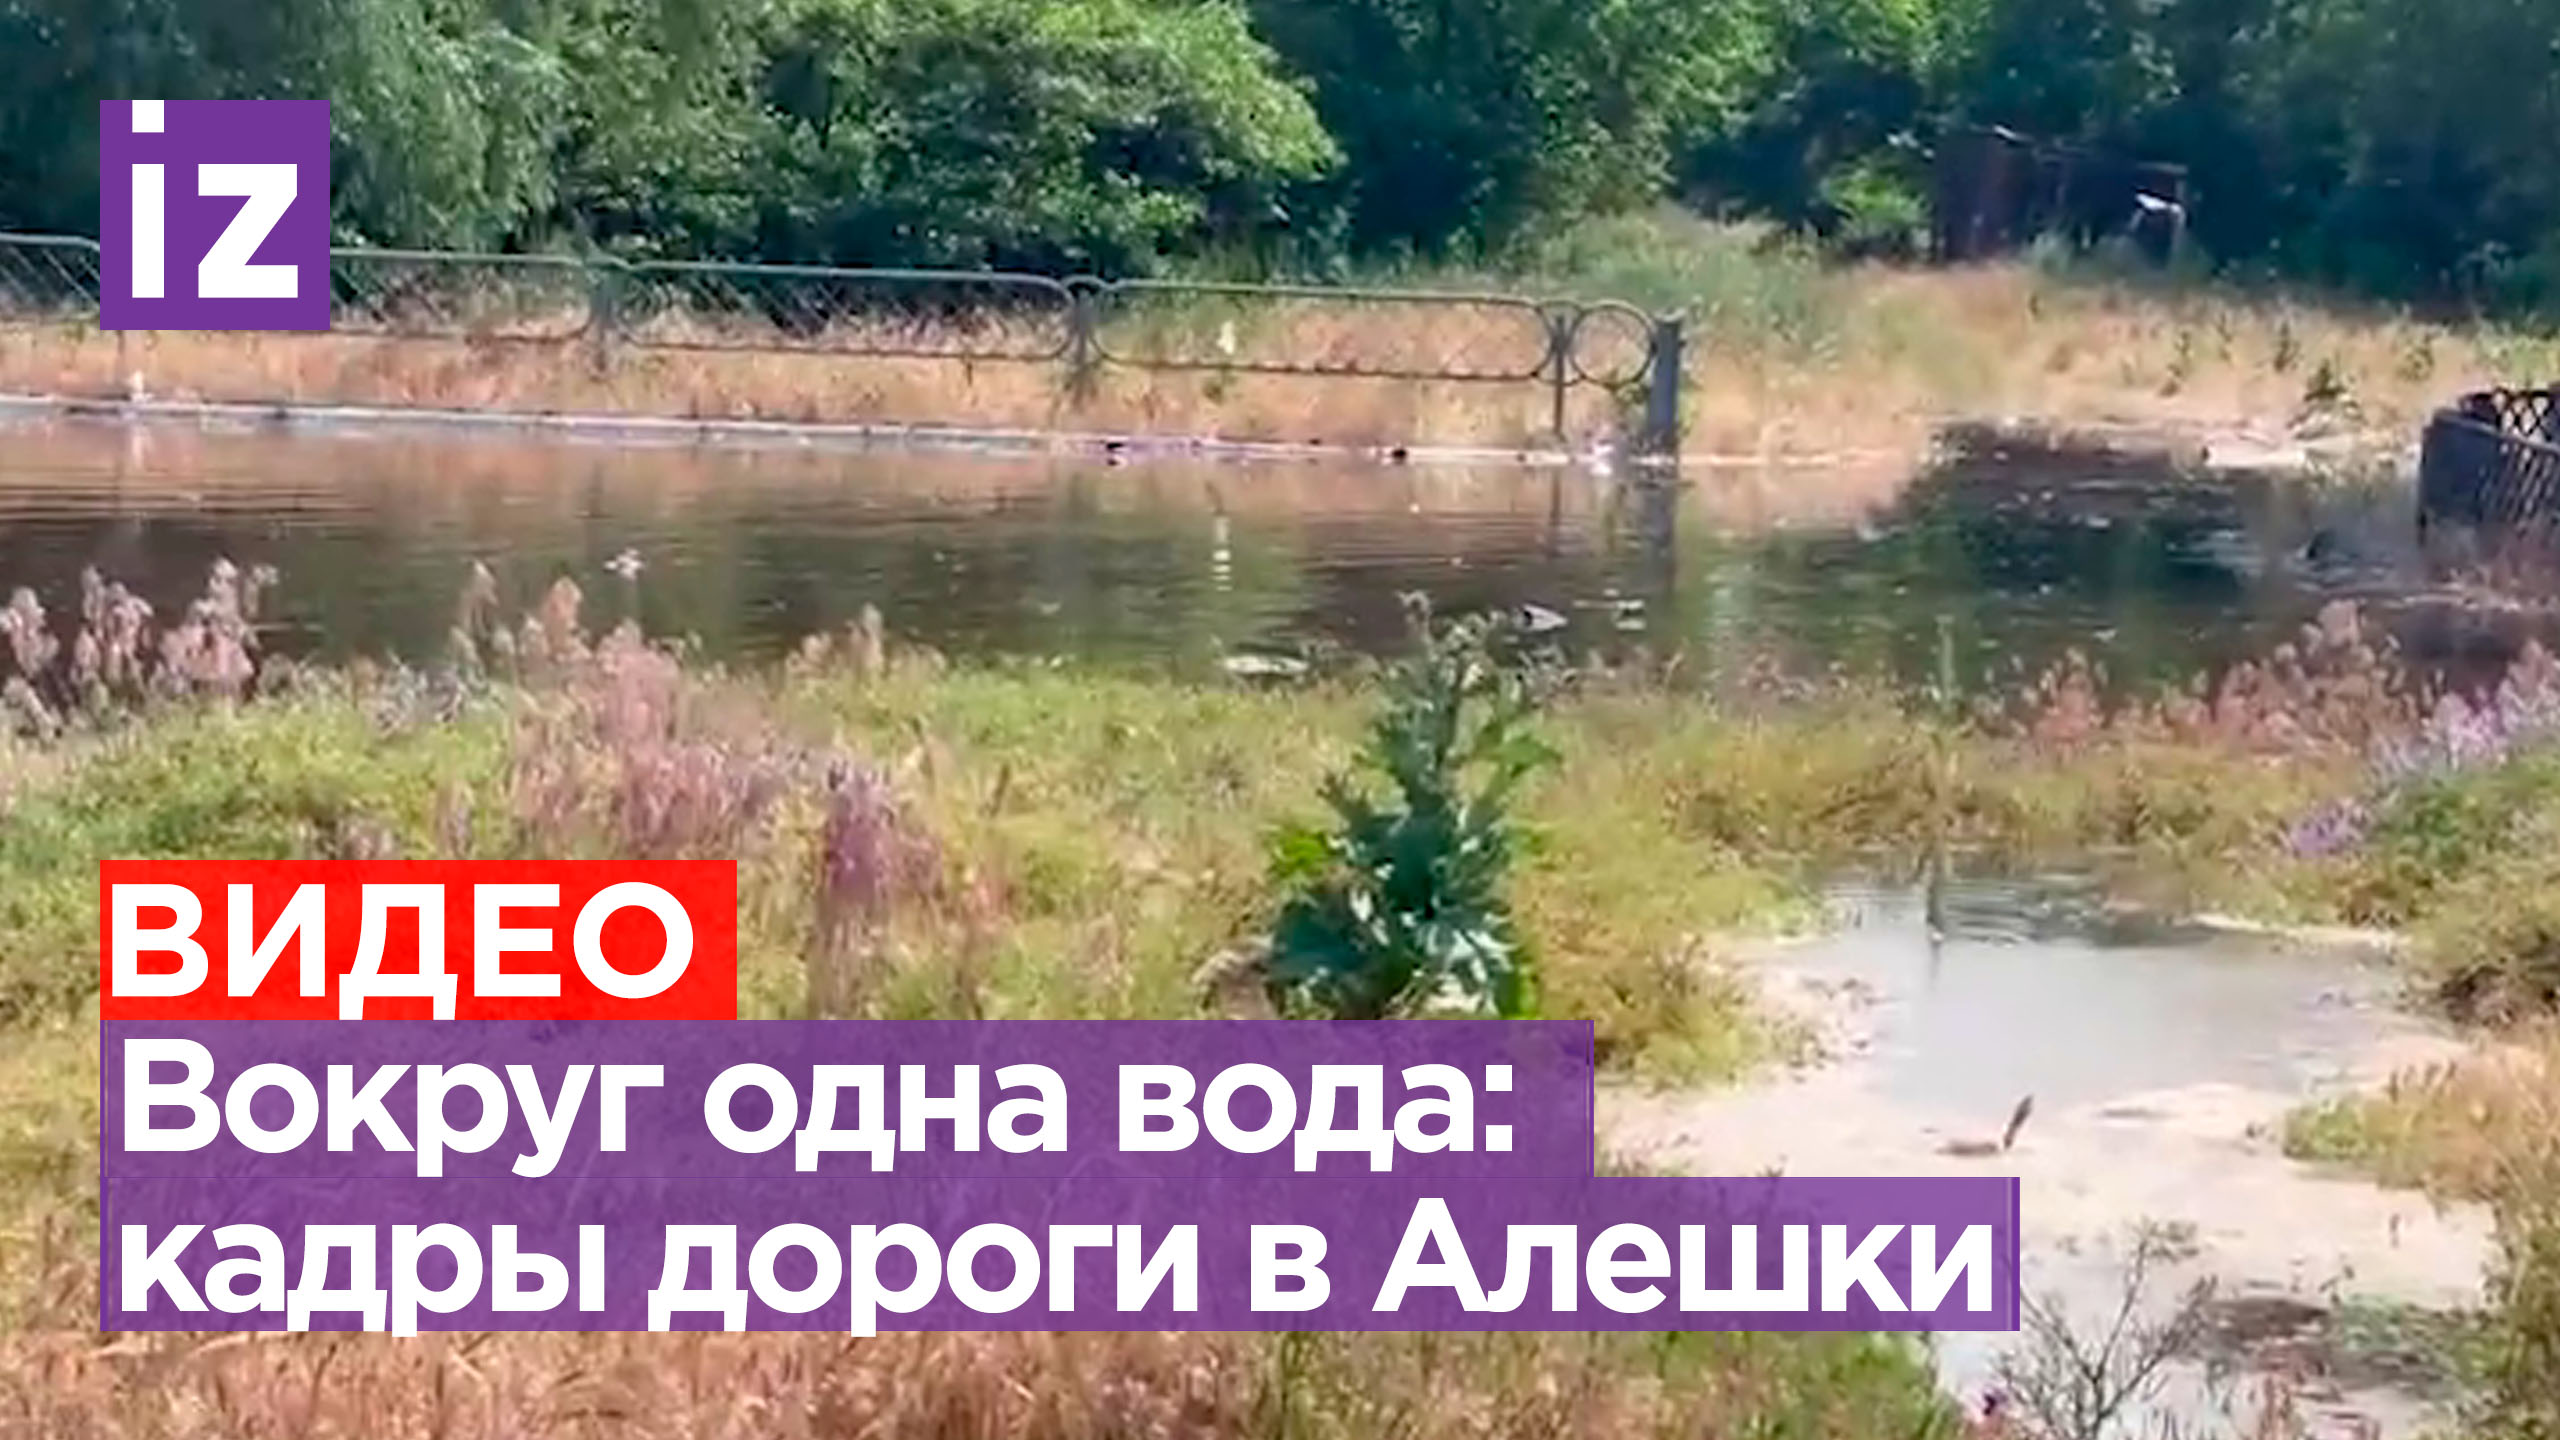 «Река на сотни метров. До горизонта — одна вода»: корреспондент «Известий» показал дорогу в Алешки